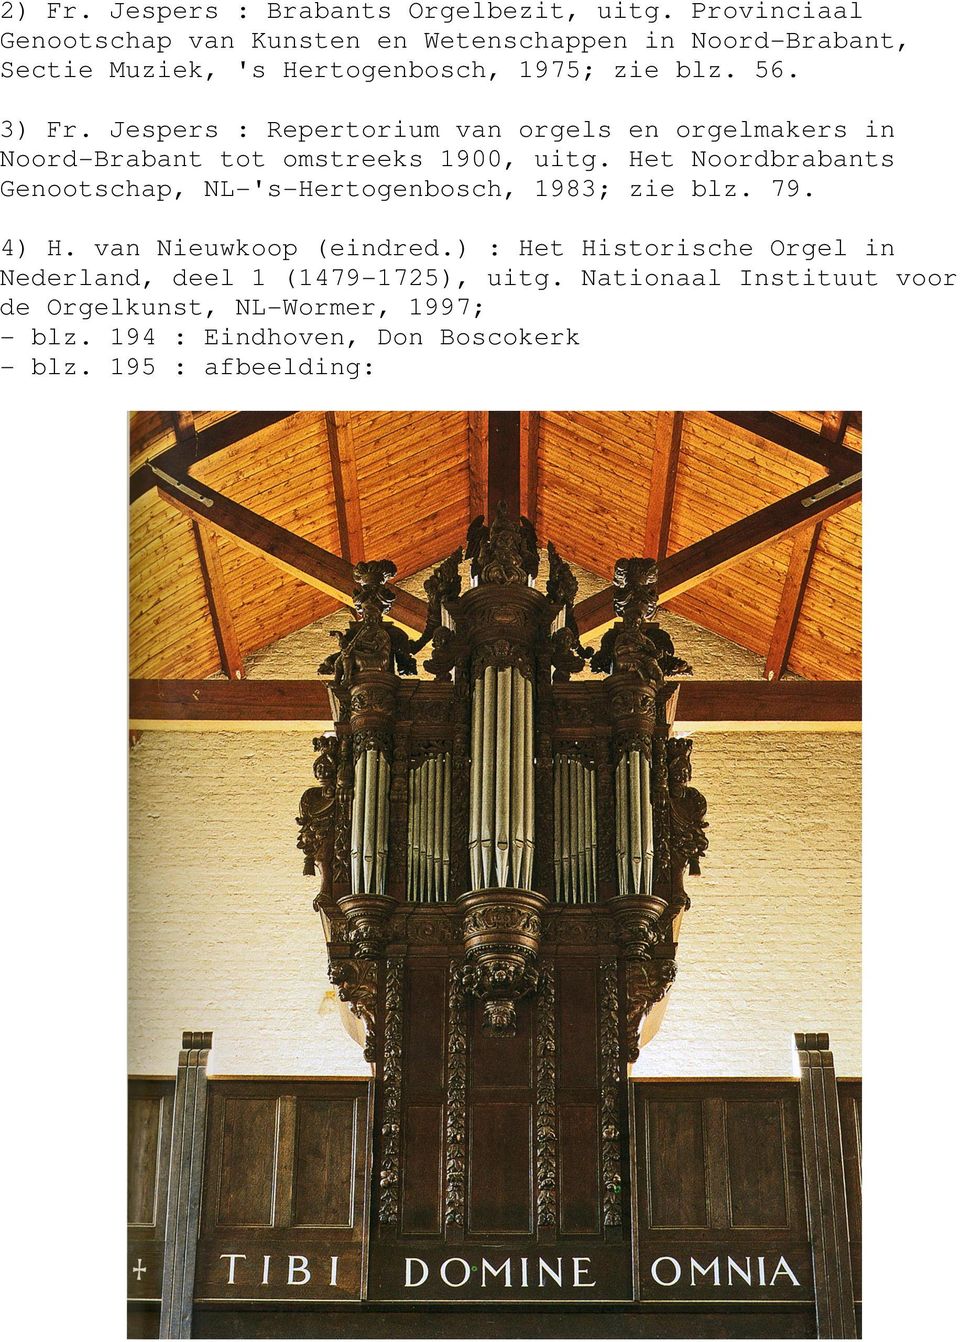 Jespers : Repertorium van orgels en orgelmakers in Noord-Brabant tot omstreeks 1900, uitg.